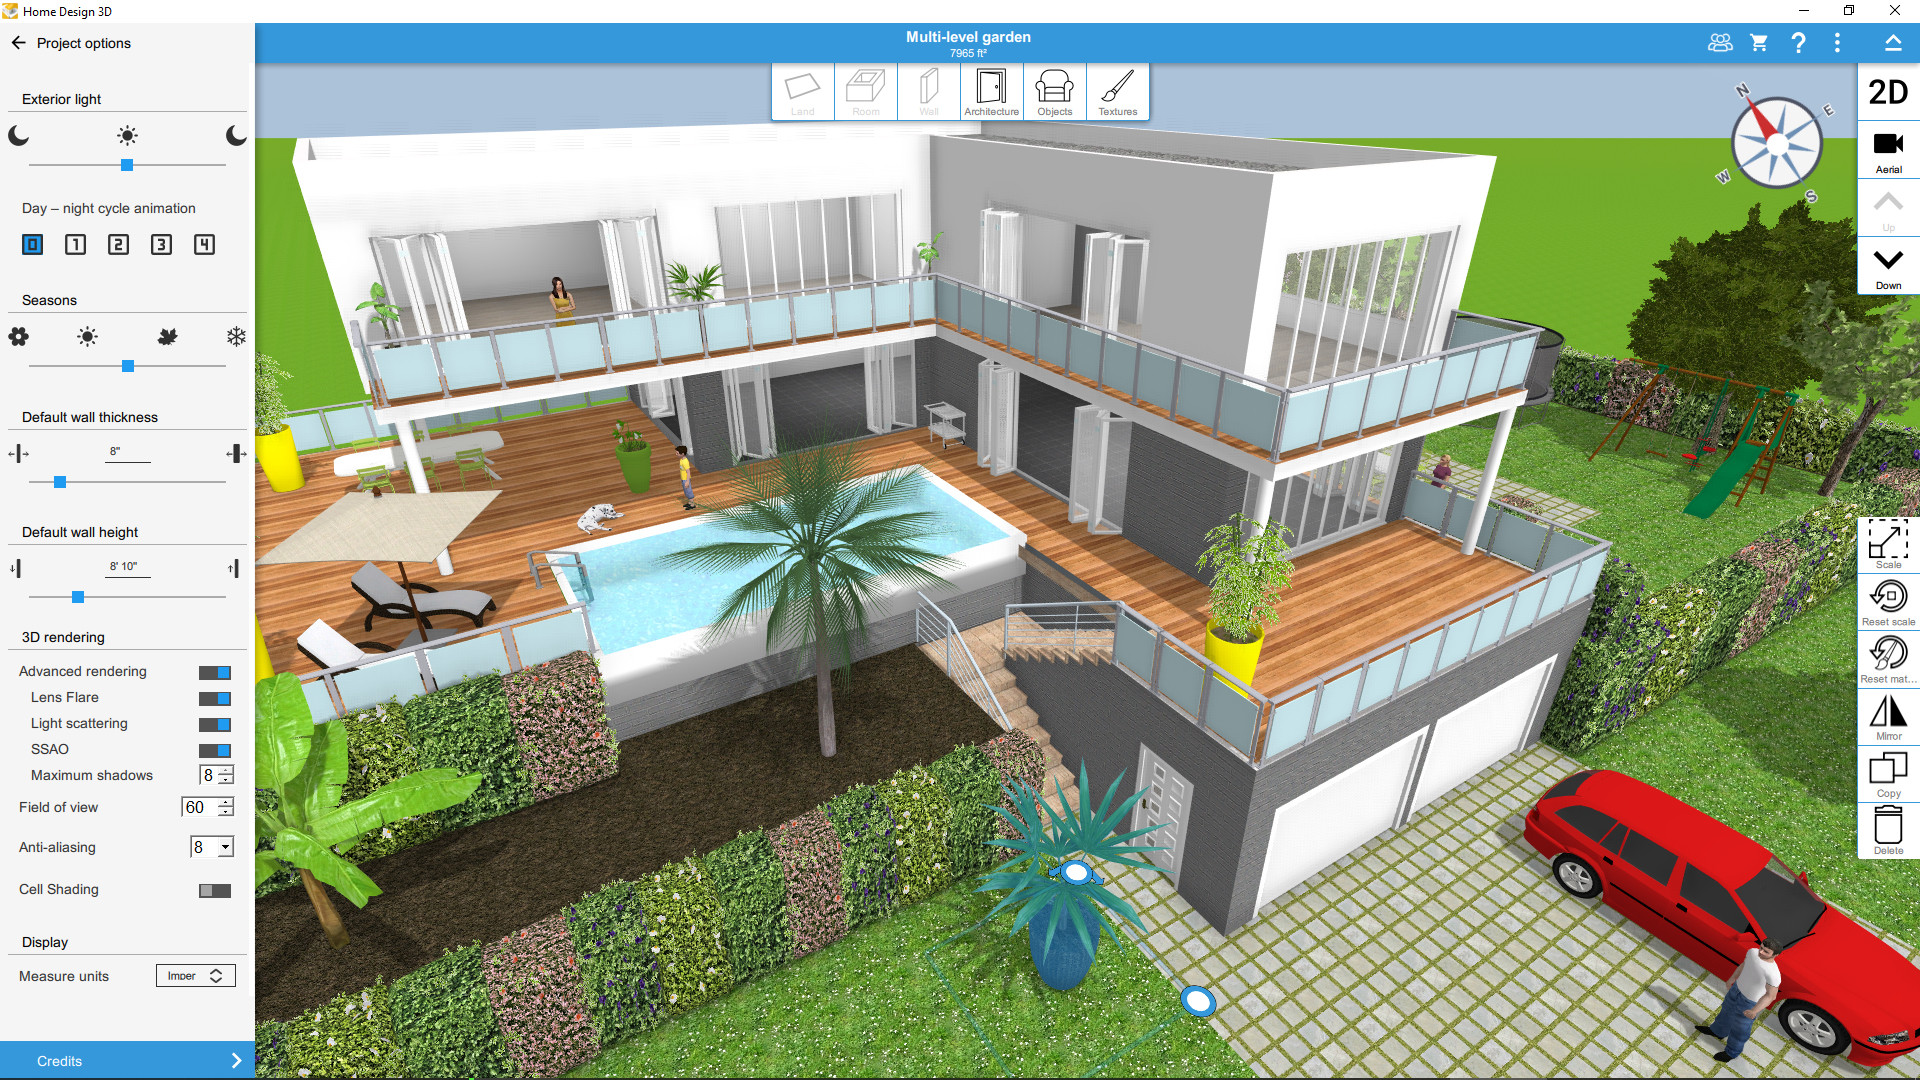 The Home Design 3D App